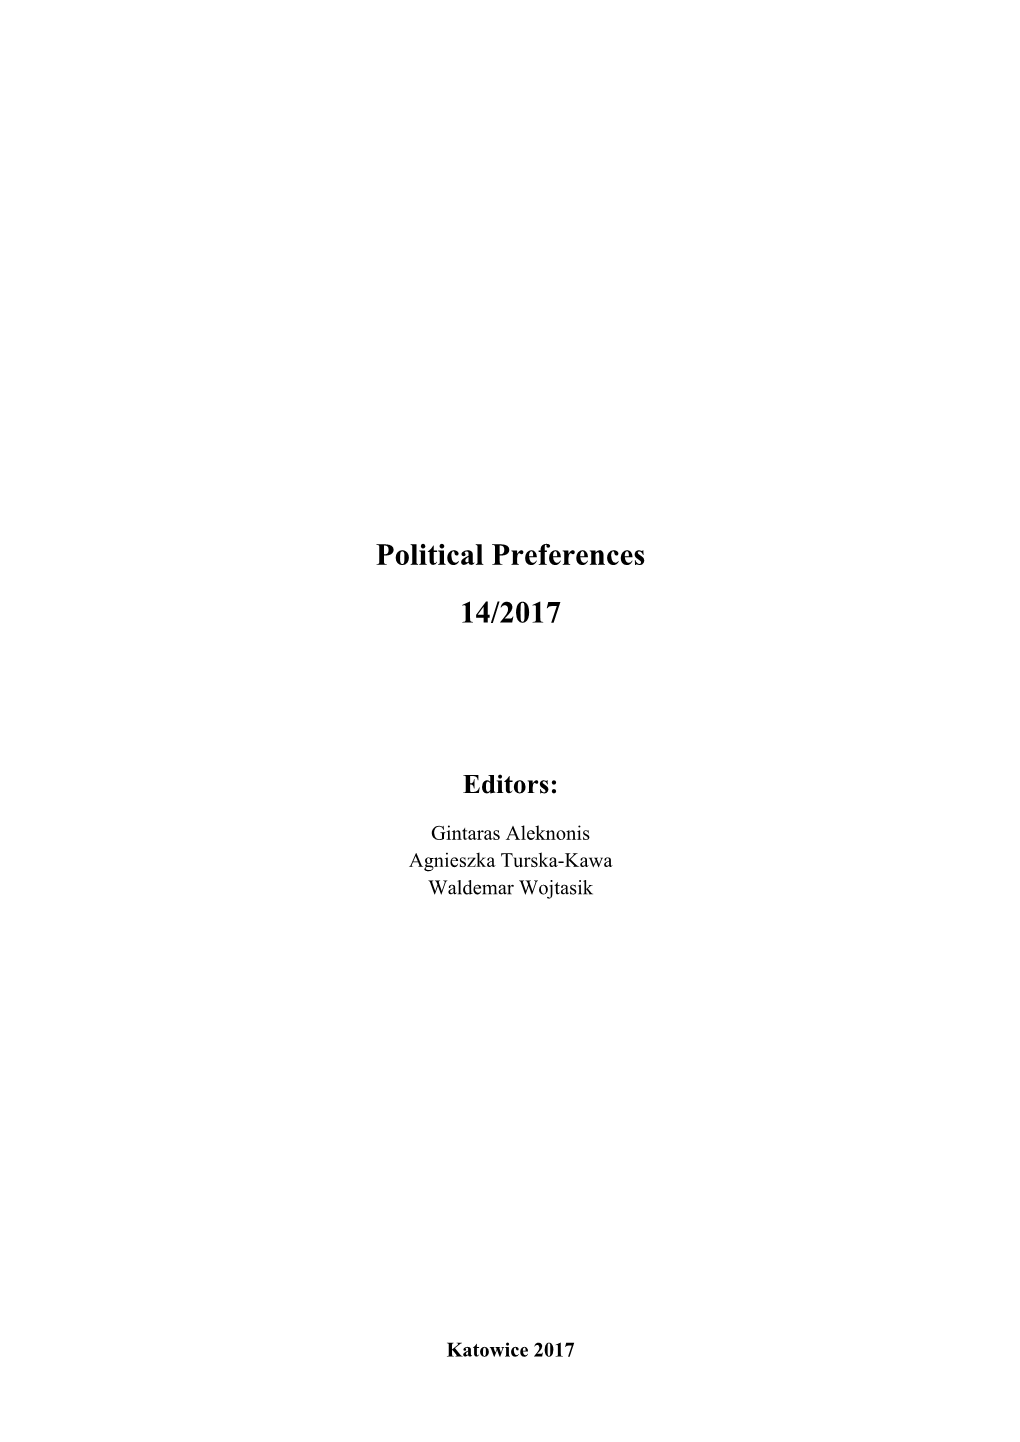 Political Preferences 14/2017